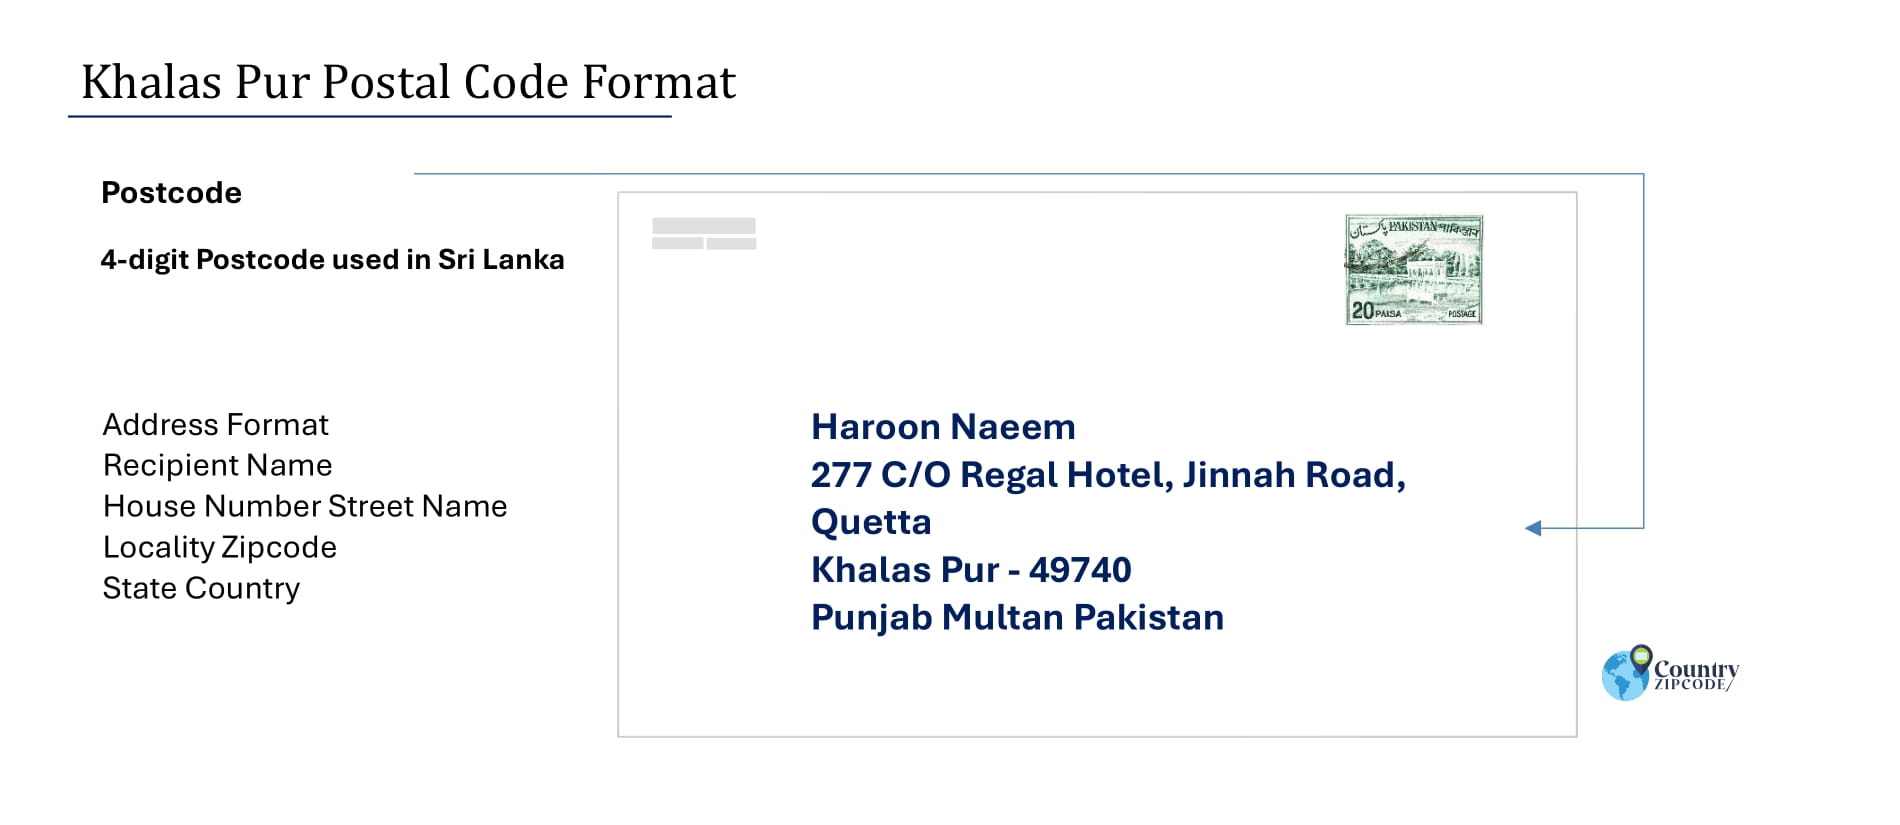 Example of Khalas Pur Pakistan Postal code and Address format